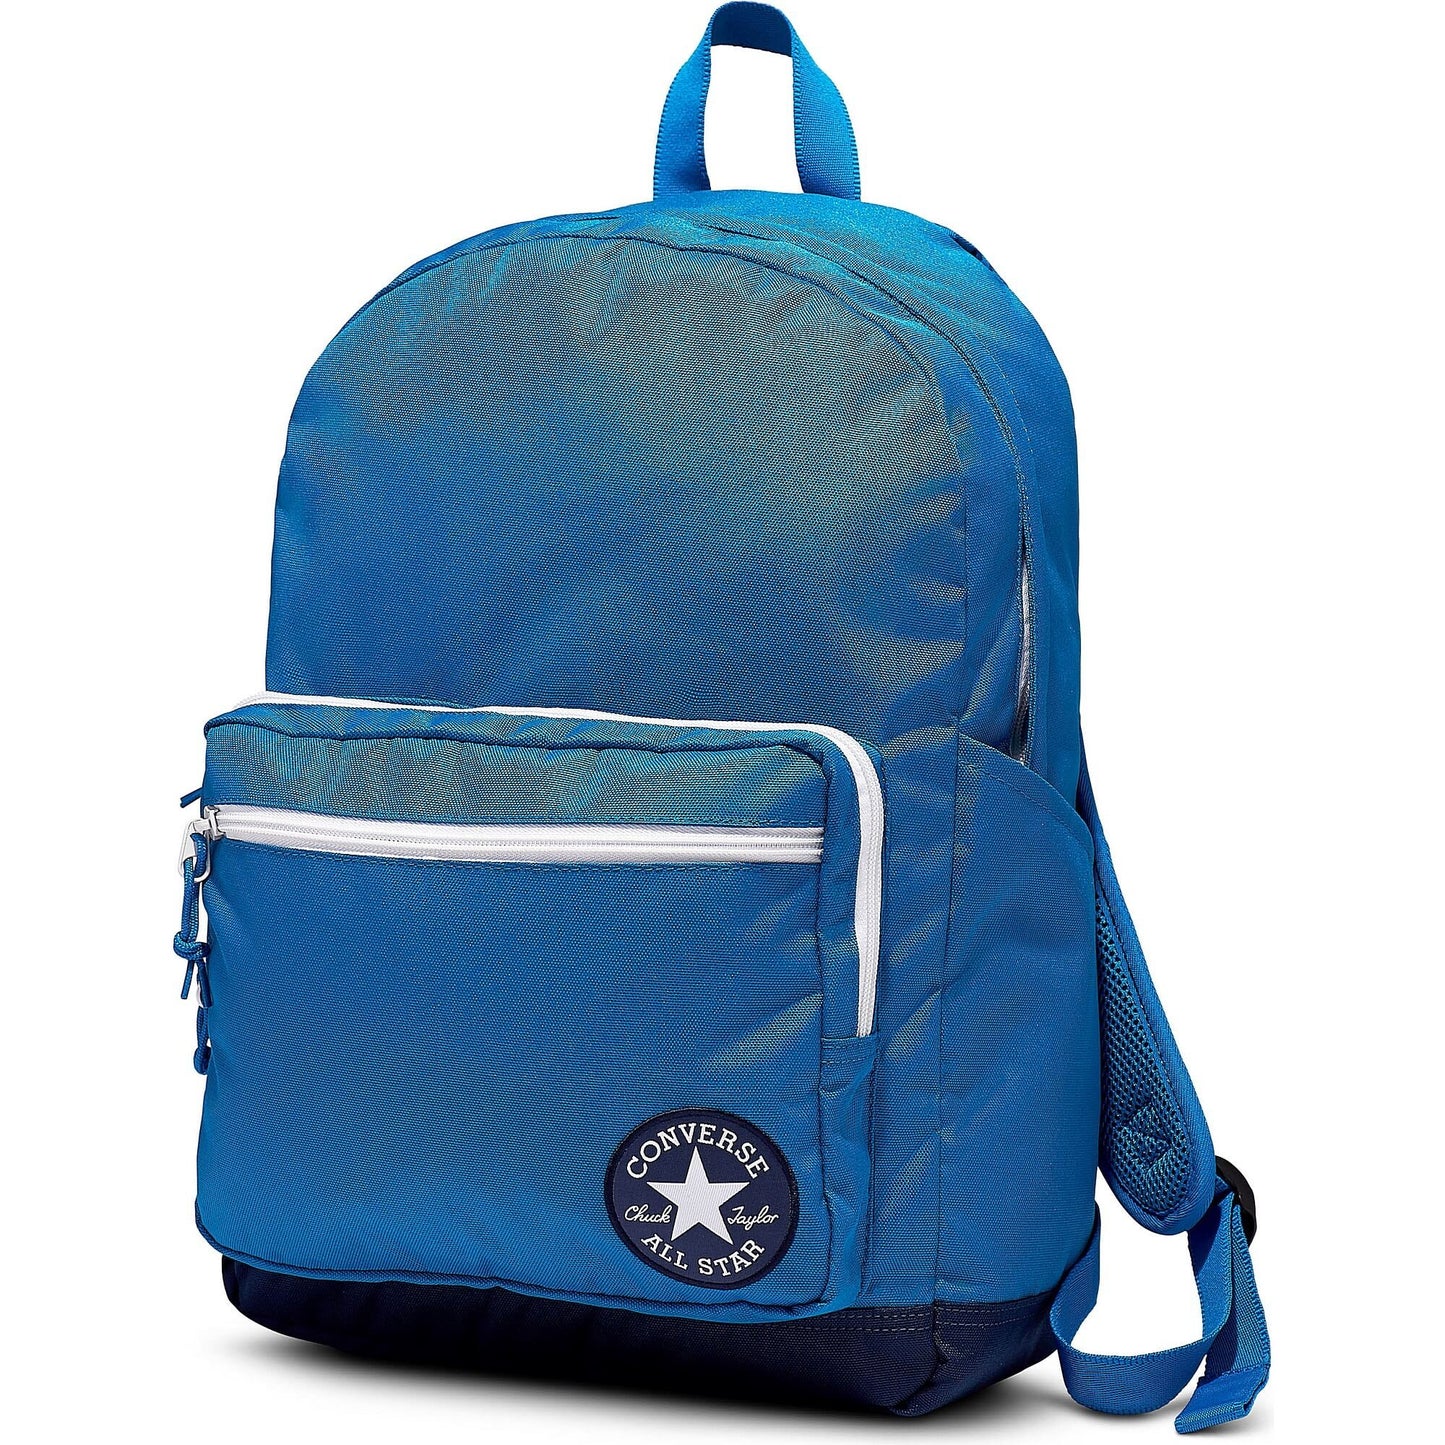 Comverse Go 2 Backpack Blue